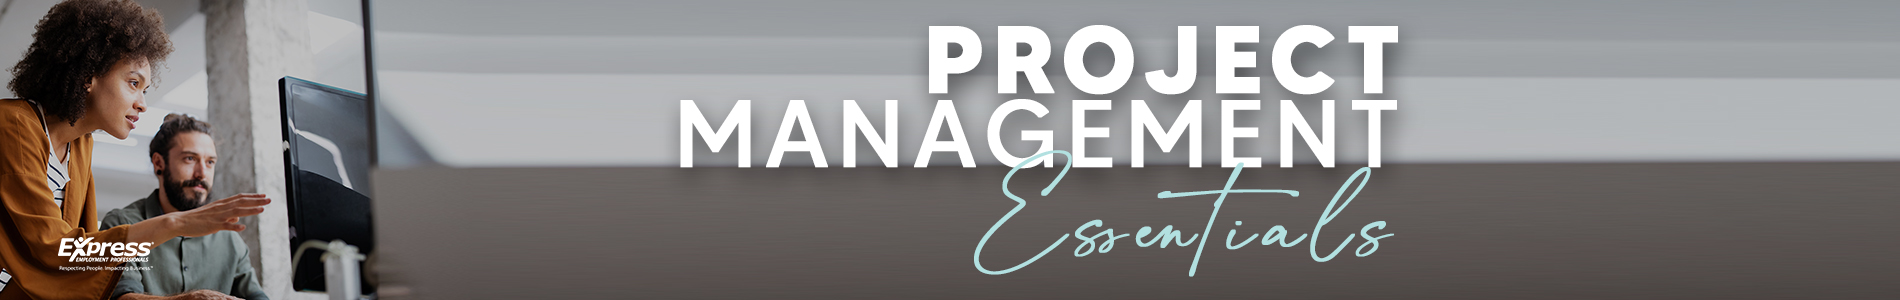 project management web page image